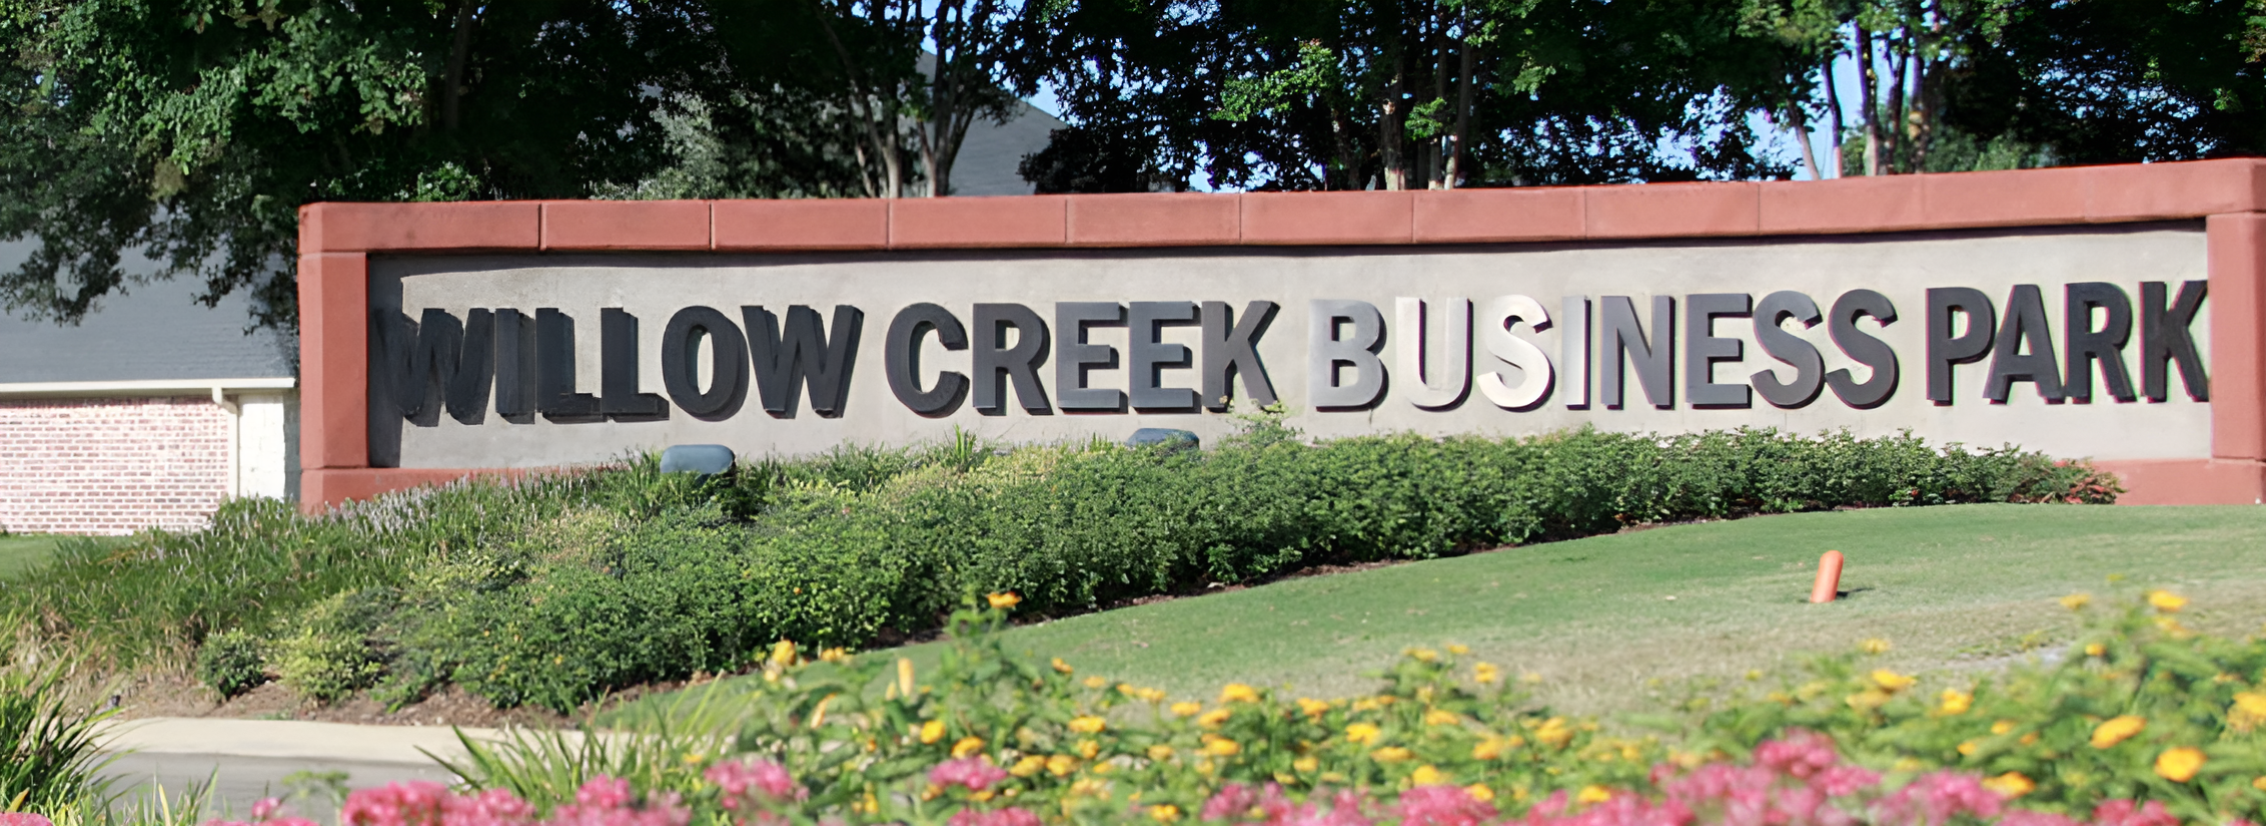 Willow Creek Business Park